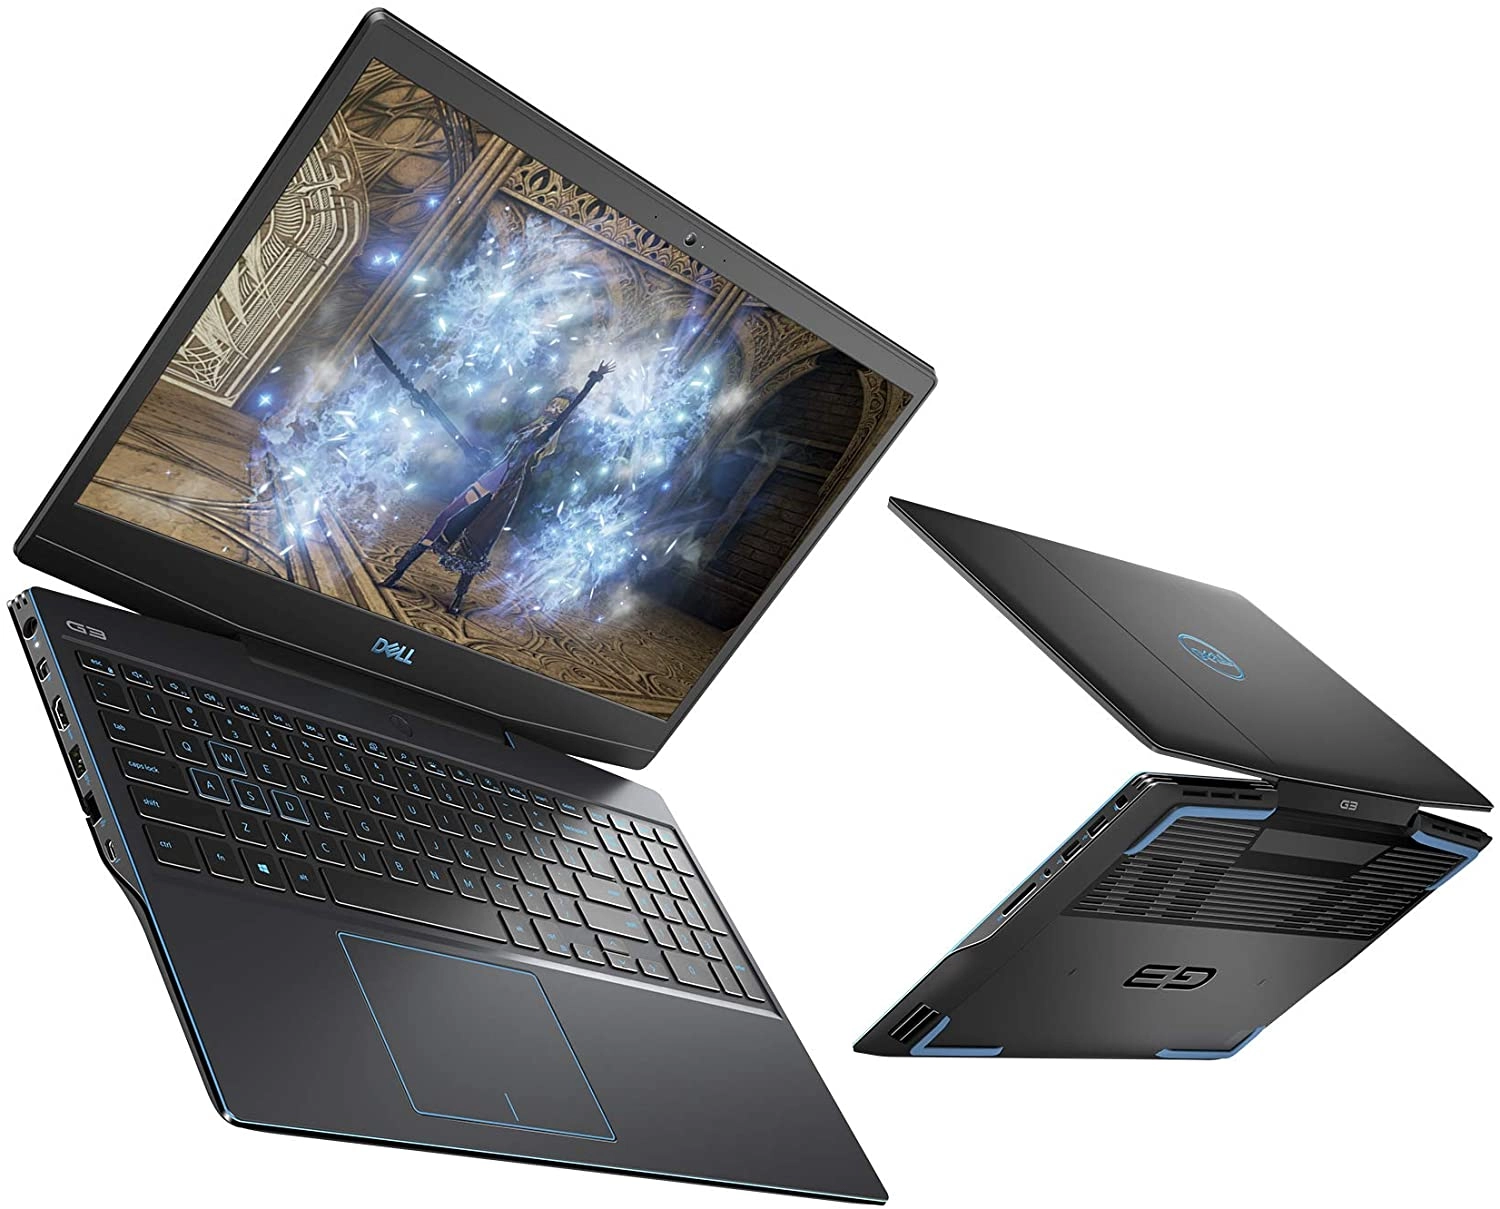 Dell Marketing laptop image